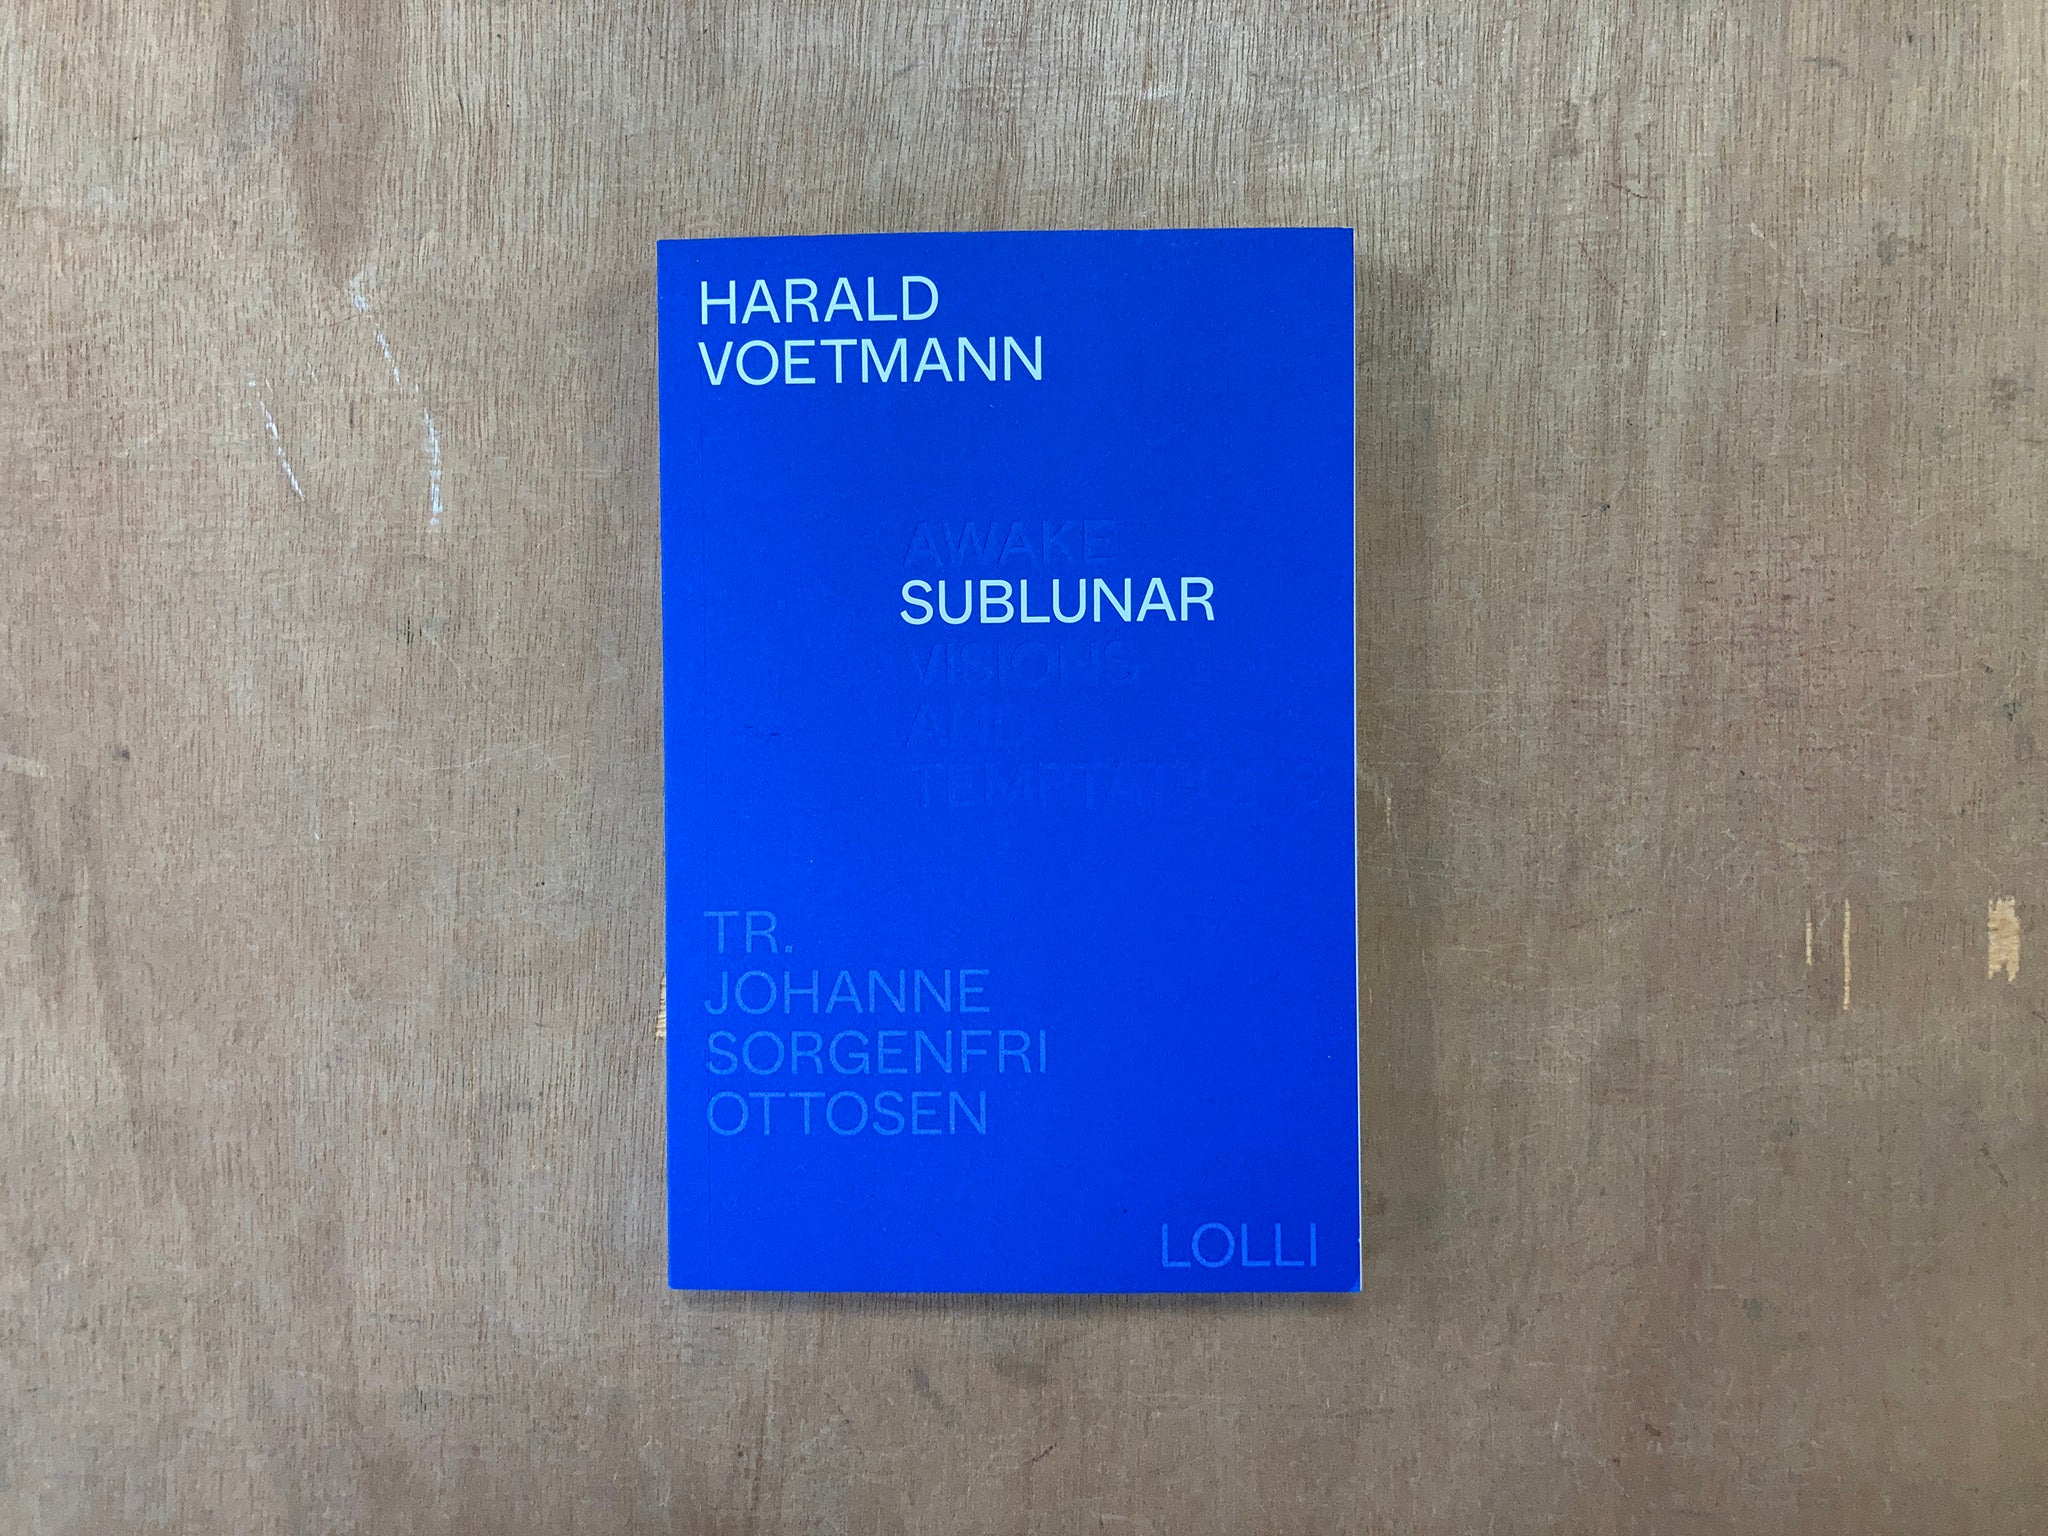 SUBLUNAR by Harald Voetmann